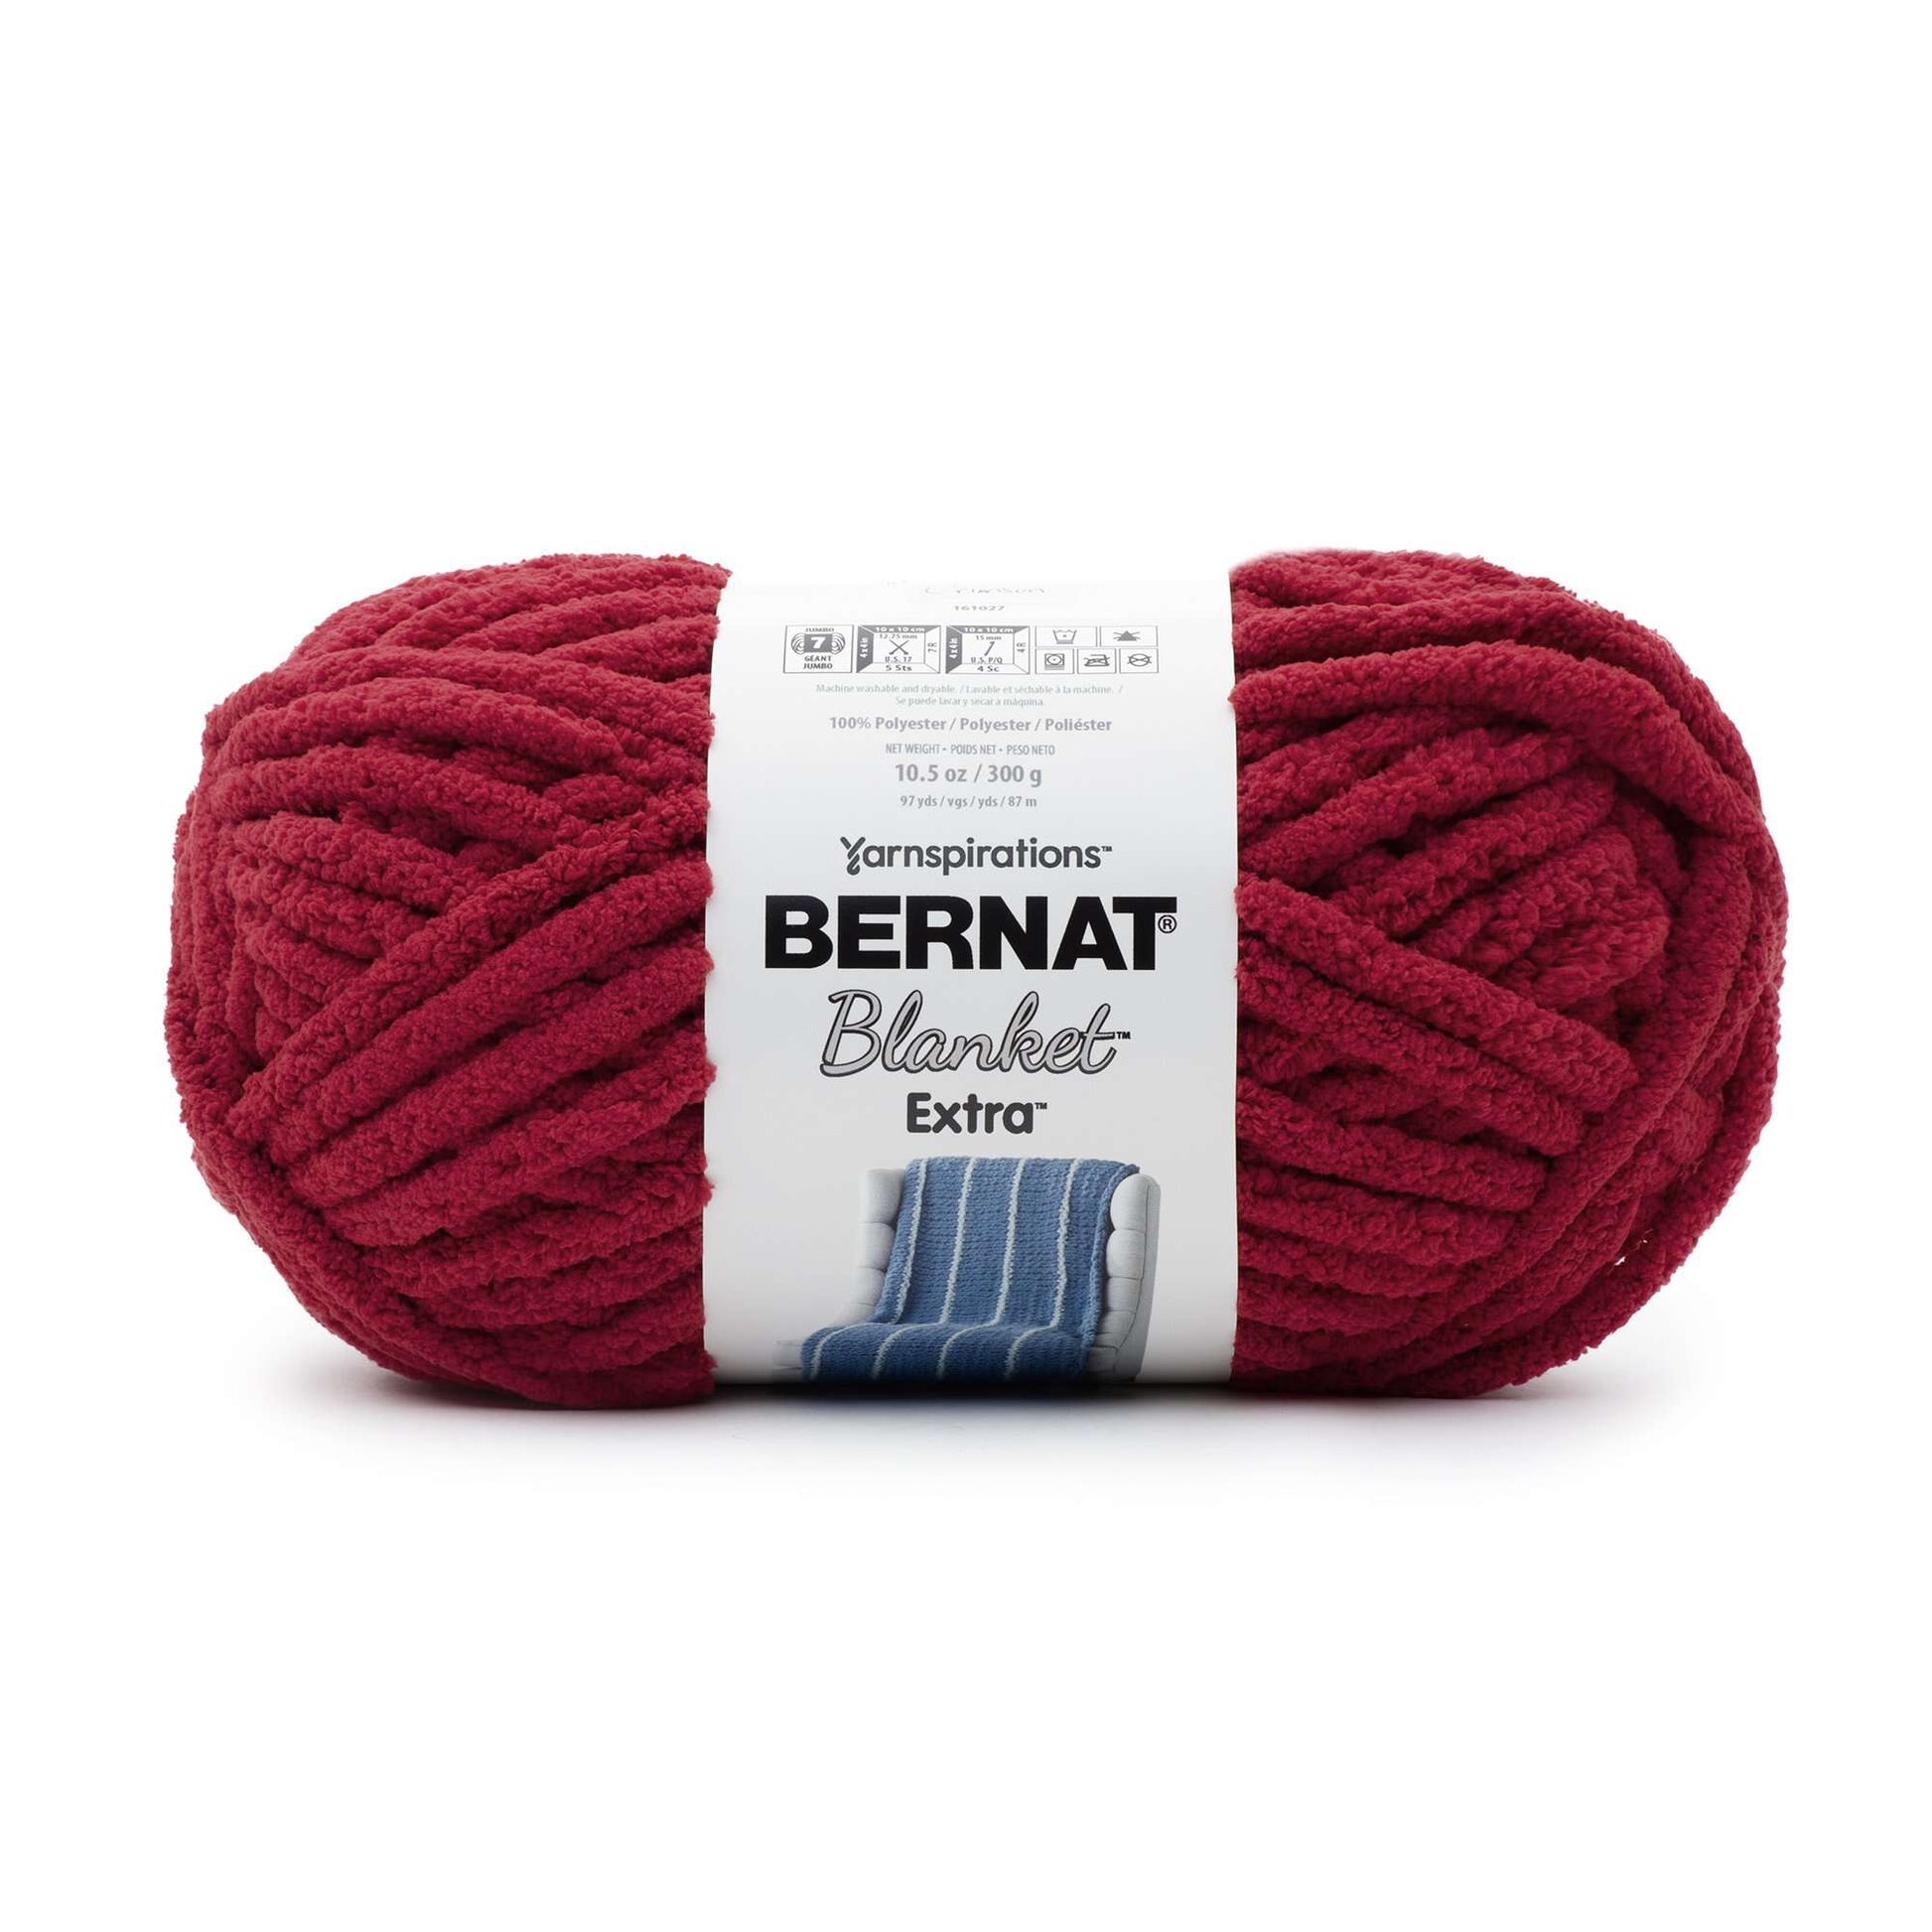 Bernat Blanket Extra Yarn (300g/10.5oz) - Clearance Shades* Crimson